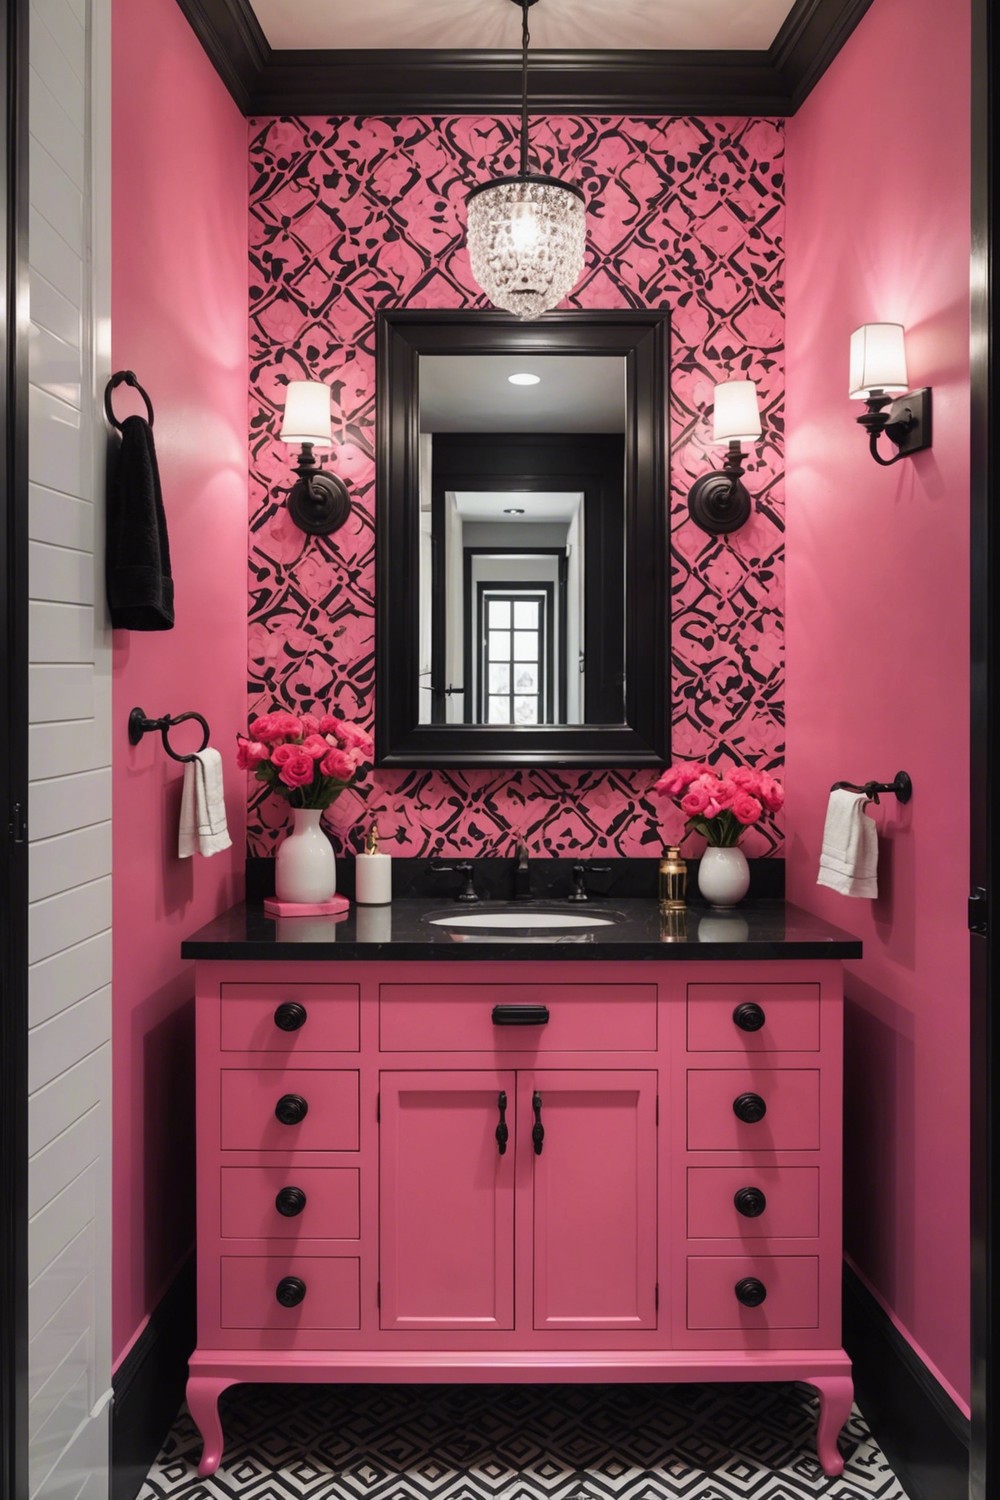 Whimsical Pink and Black Bathroom